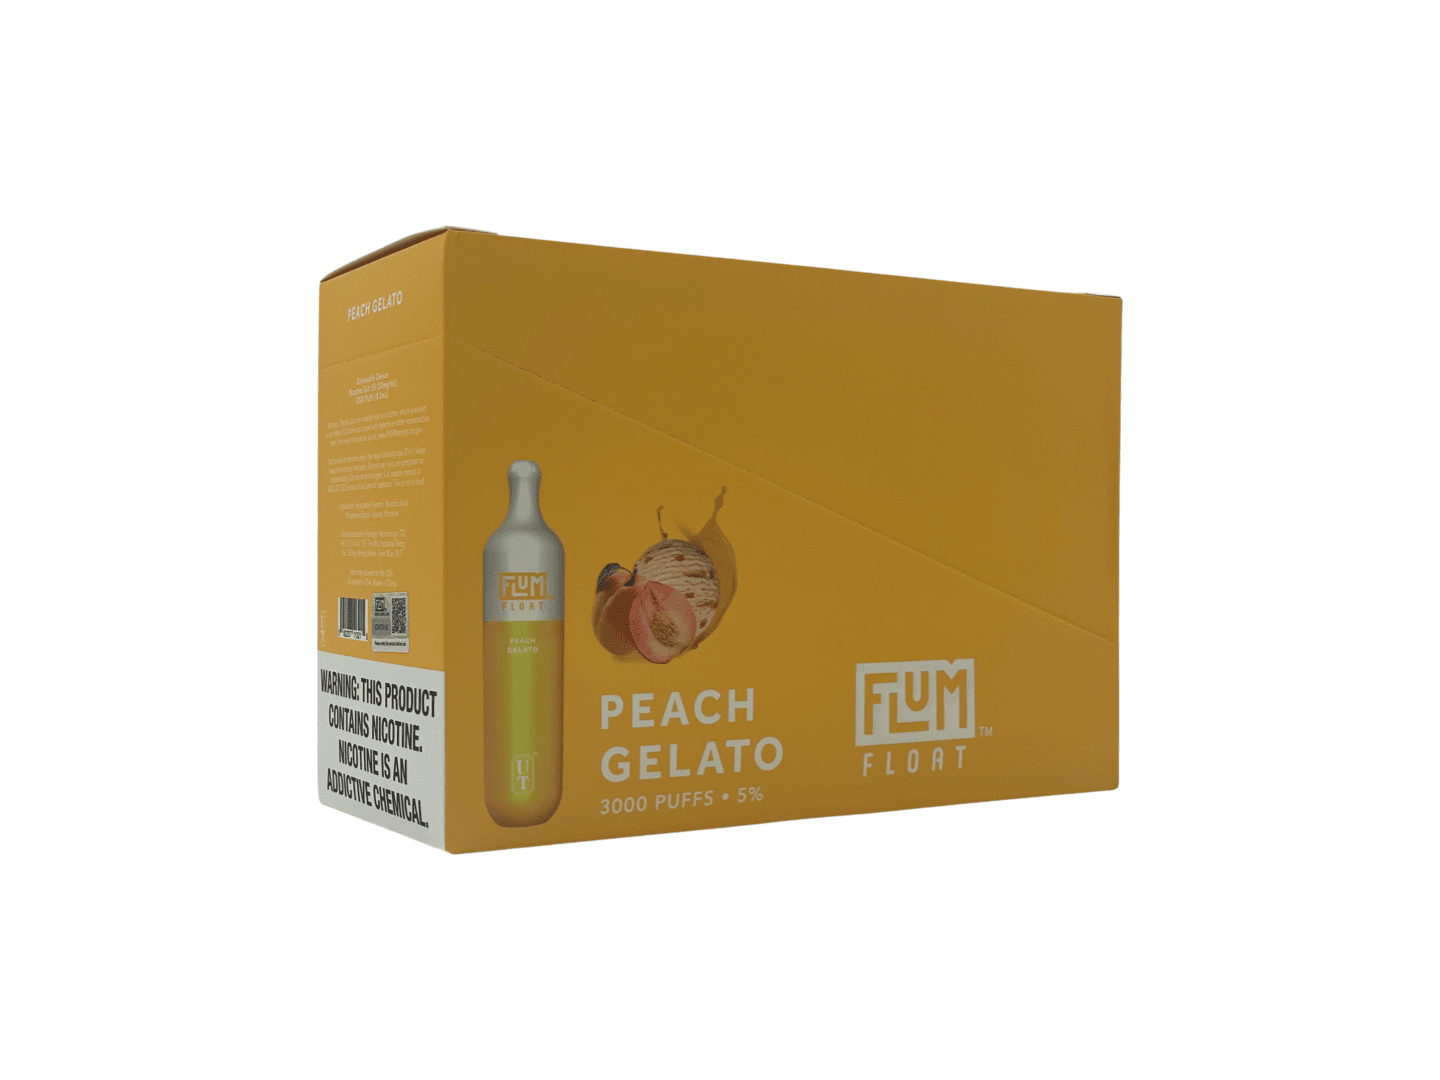 Flum Float Peach Gelato Flavor Box / Brick disposable vape